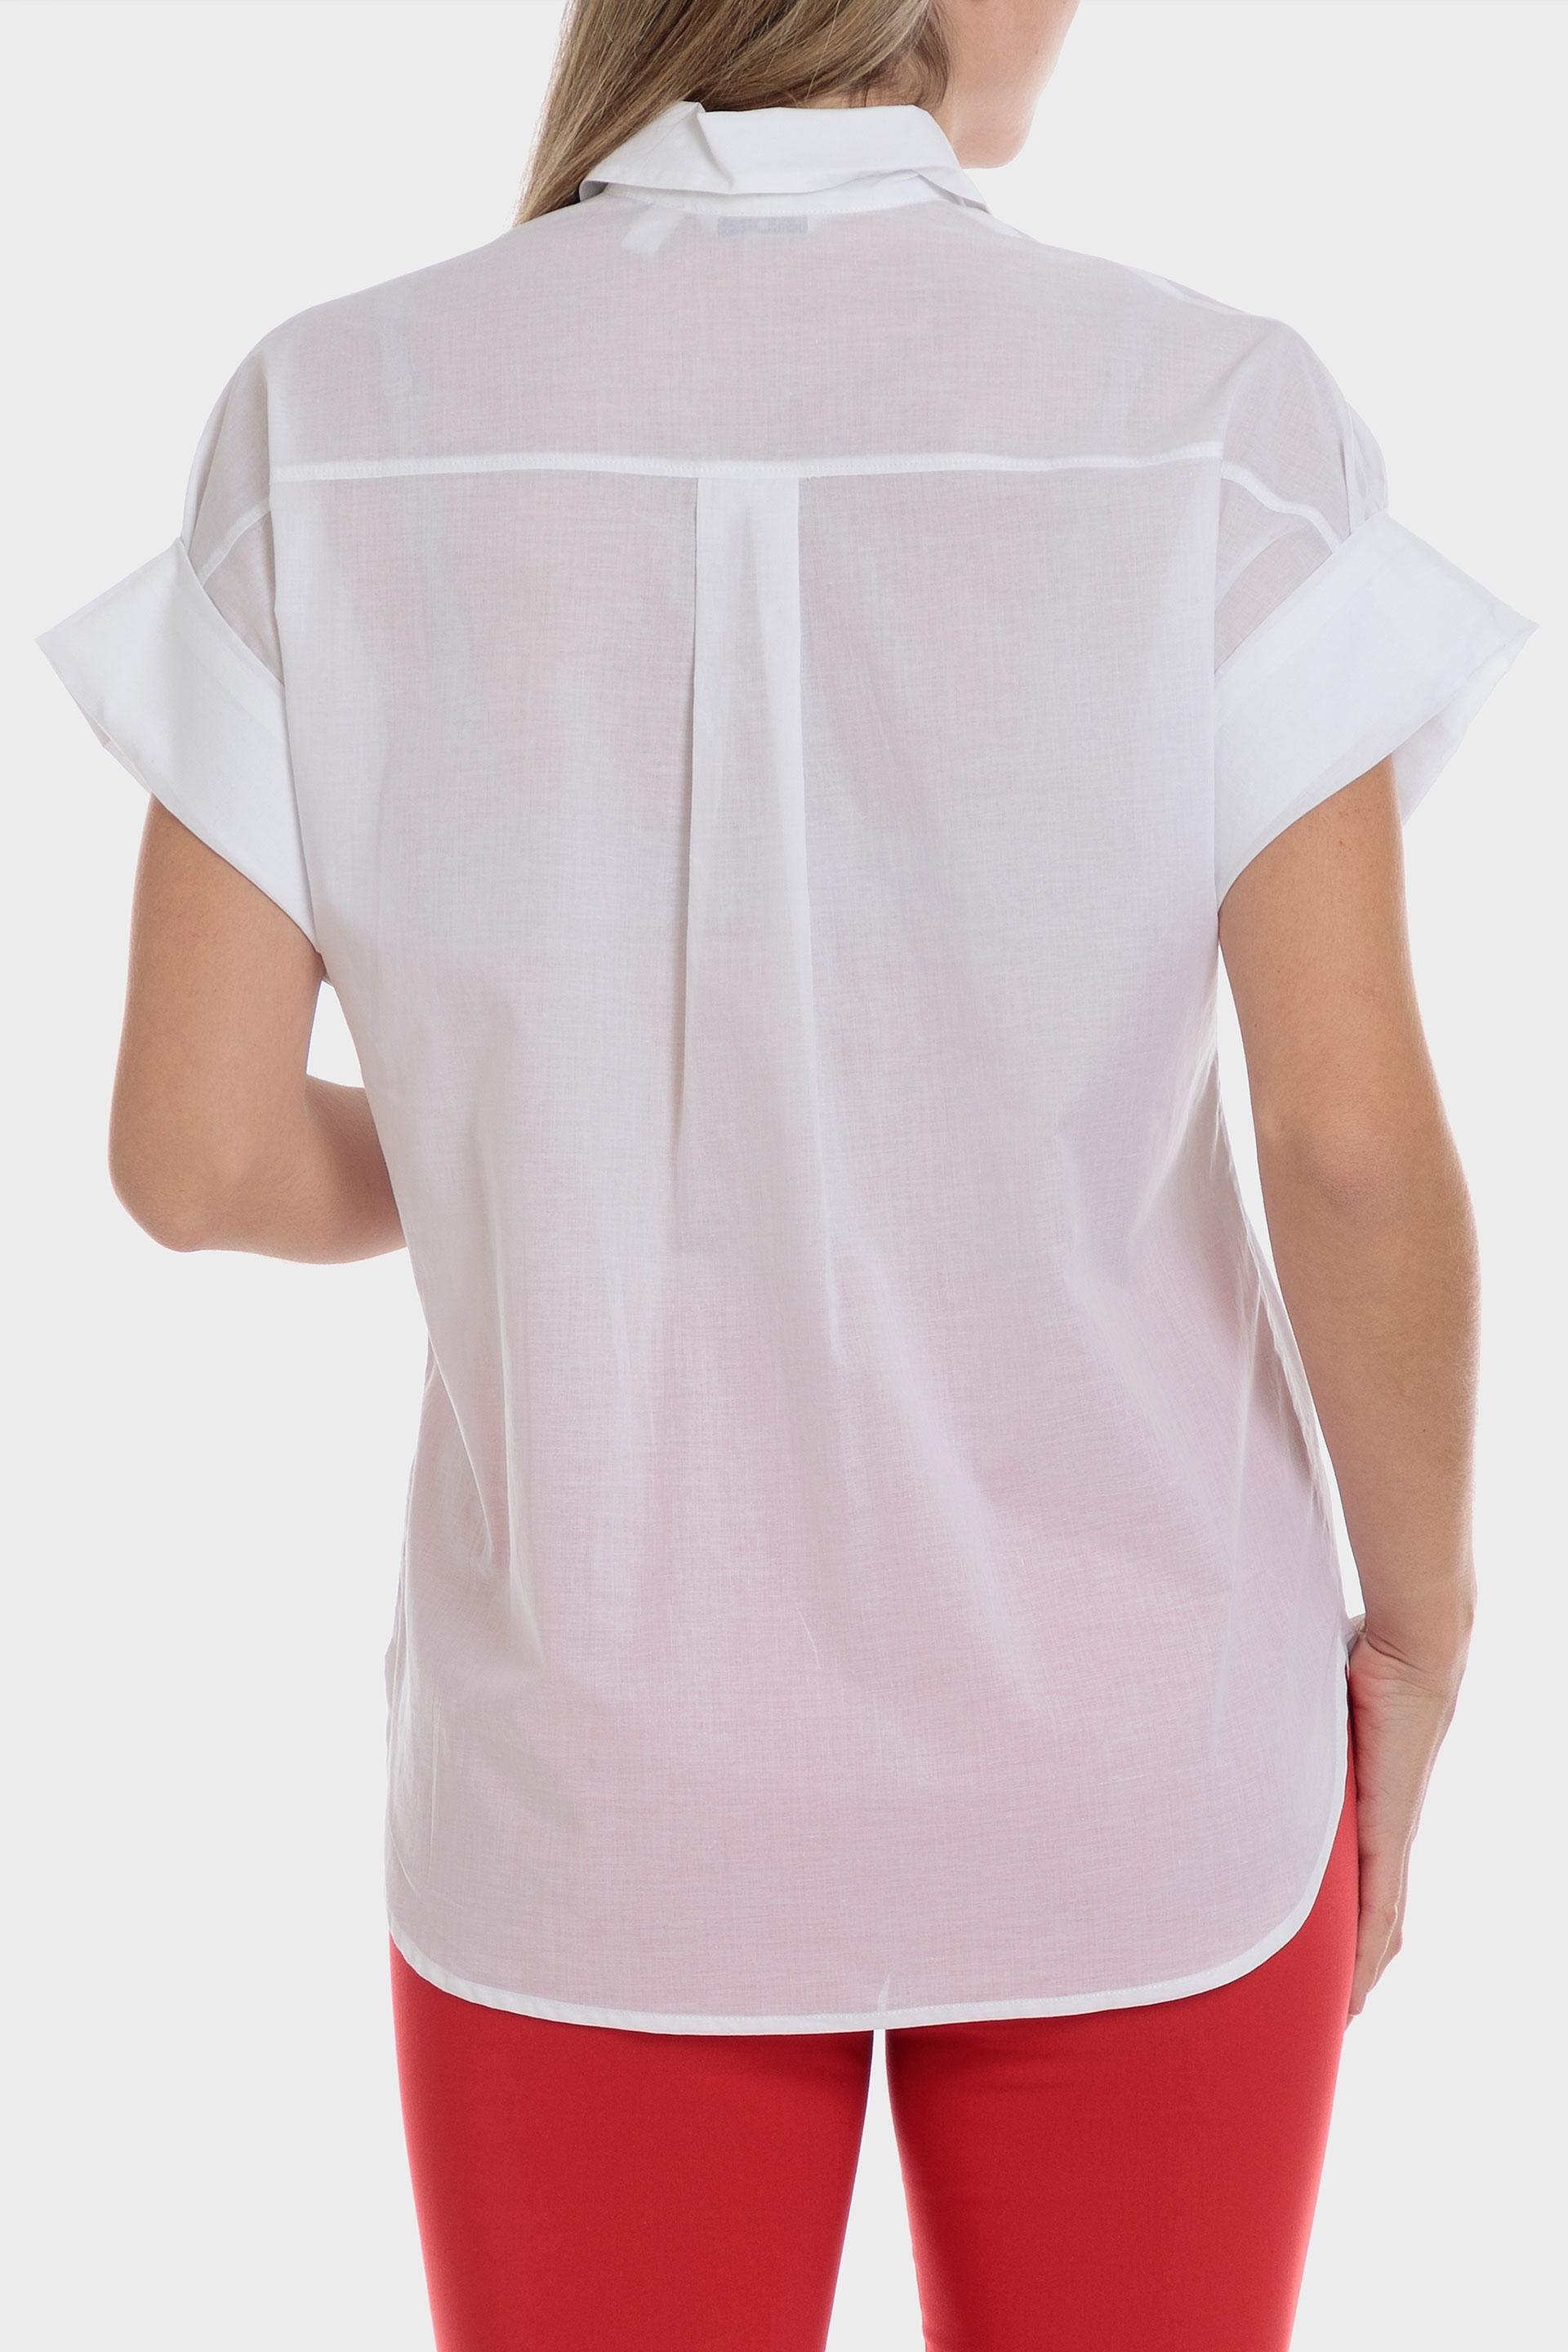 Punt Roma - White Short Sleeve Buttoned Shirt